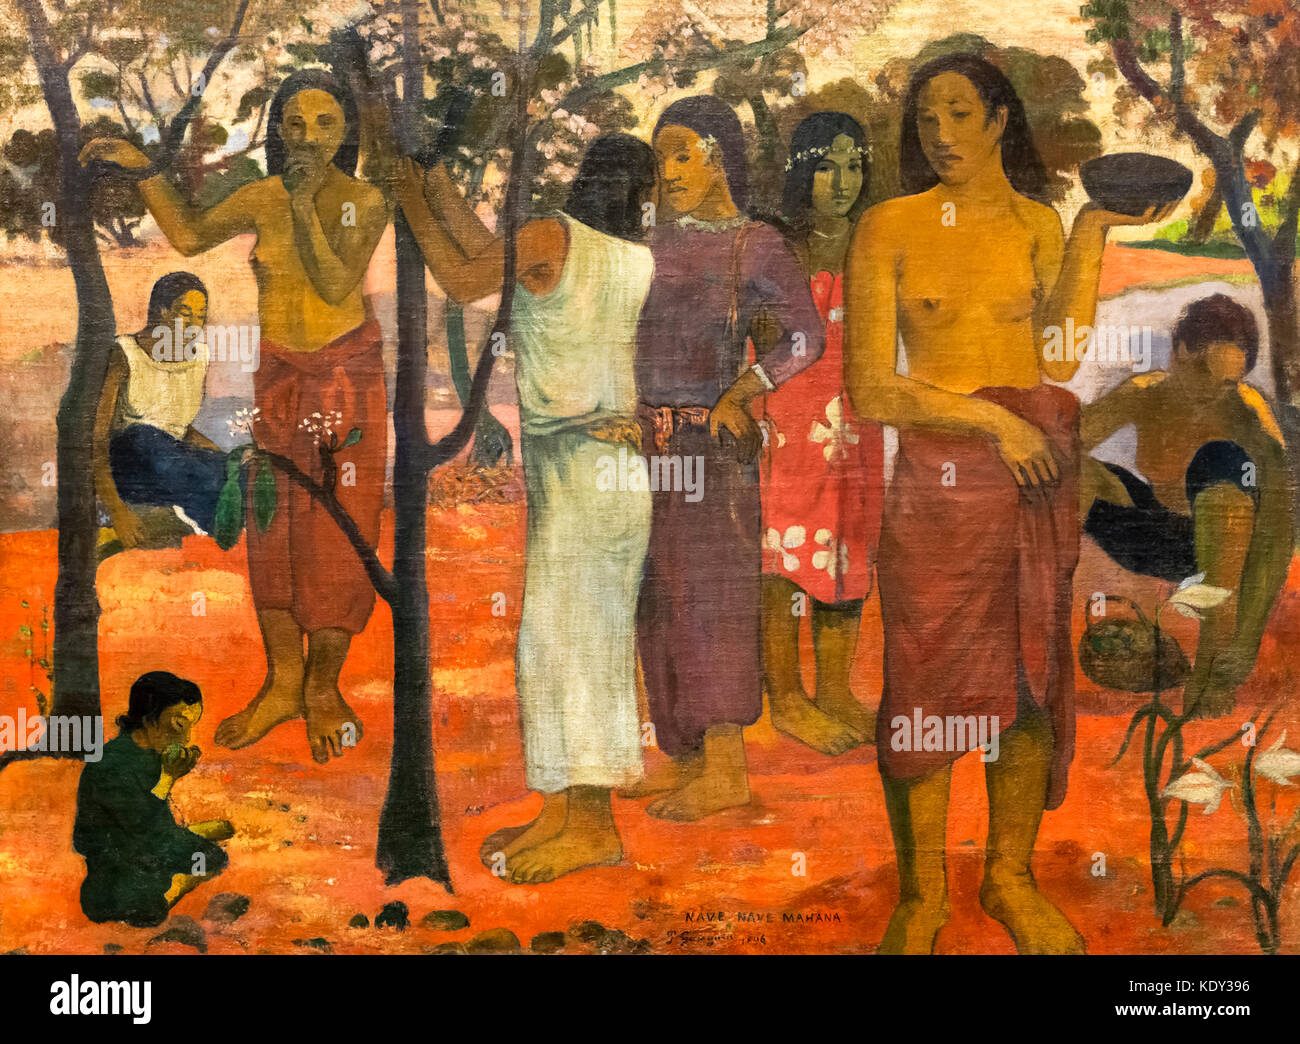 Navata navata Mahana (Jour Delicieux / deliziosa giornata) da Paul Gauguin (1848-1903), olio su tela, 1896 Foto Stock